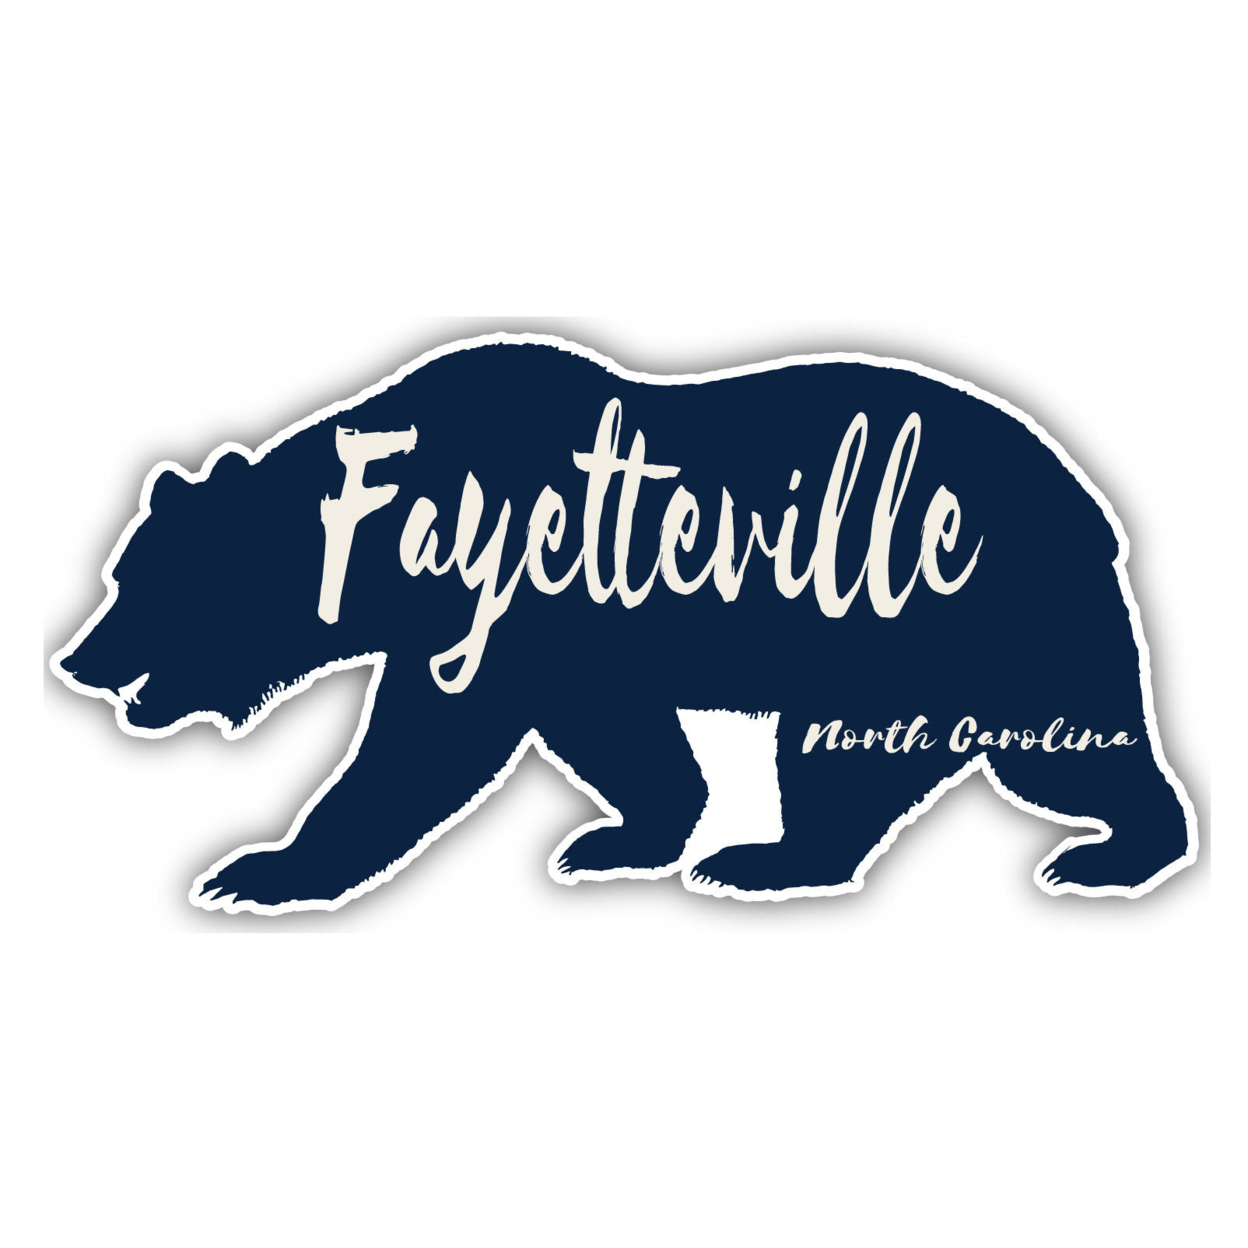 Fayetteville North Carolina Souvenir Decorative Stickers (Choose Theme And Size) - Single Unit, 4-Inch, Camp Life